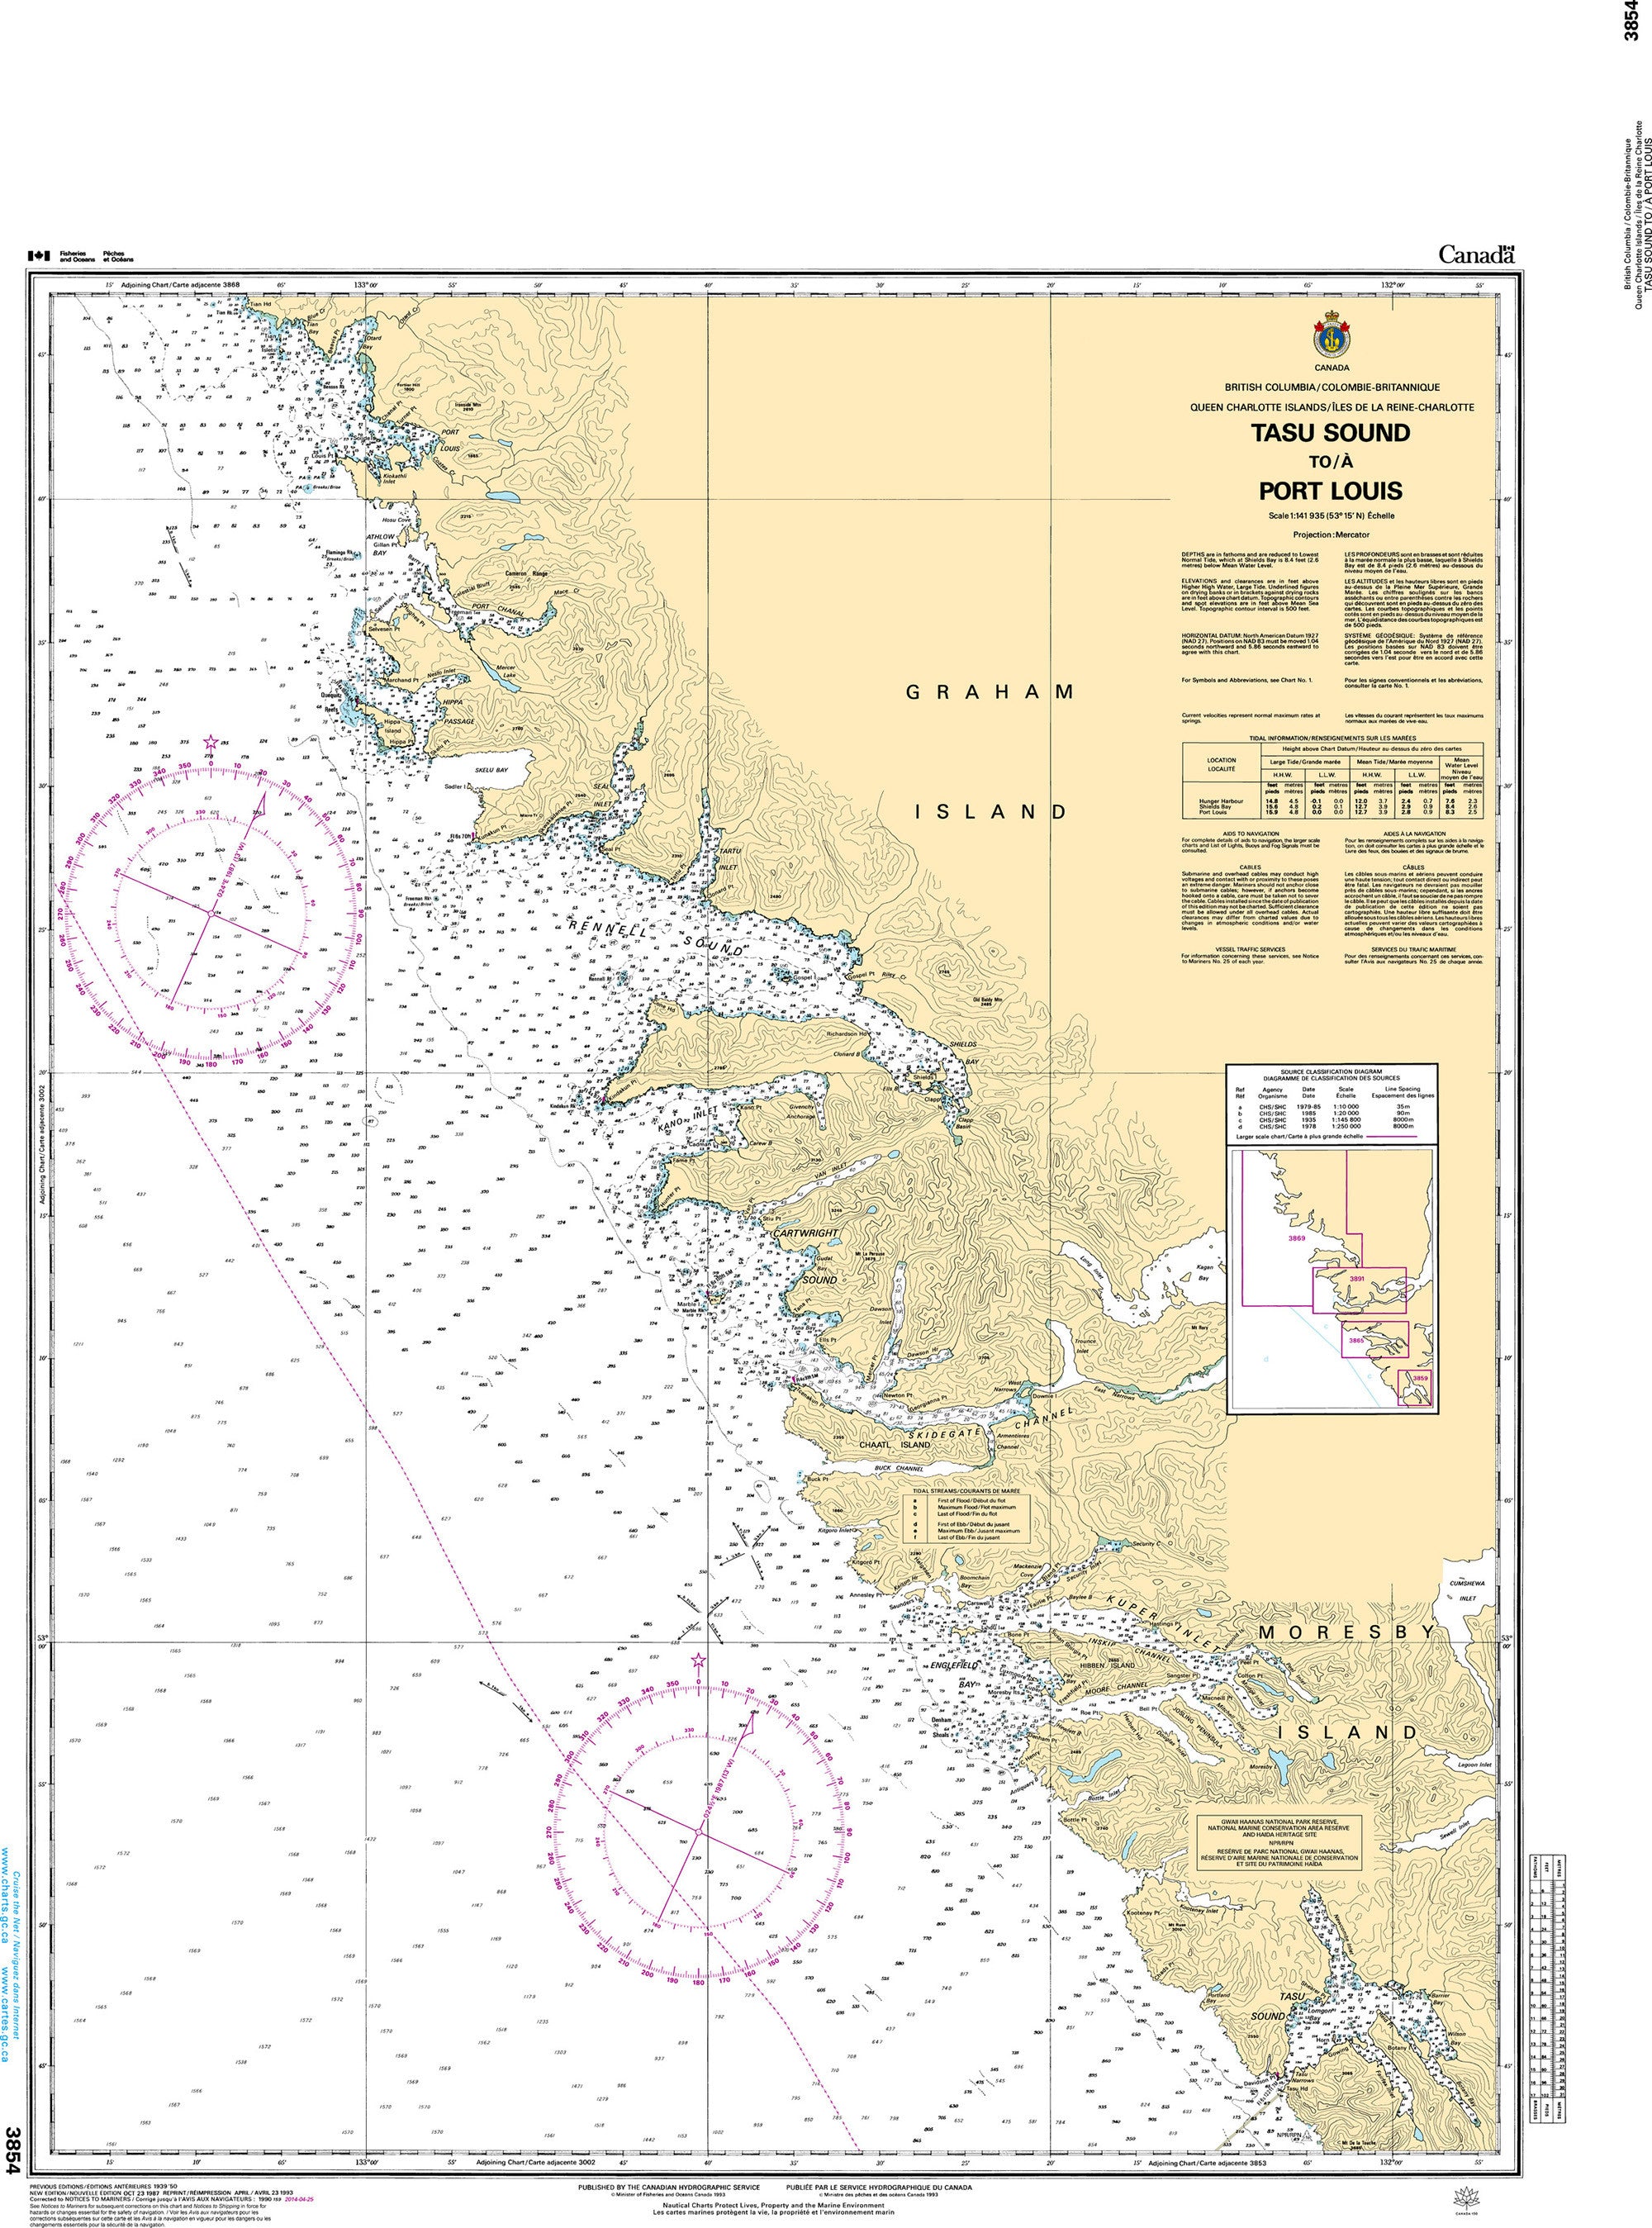 Canadian Hydrographic Service Nautical Chart CHS3854: Tasu Sound to/à Port Louis